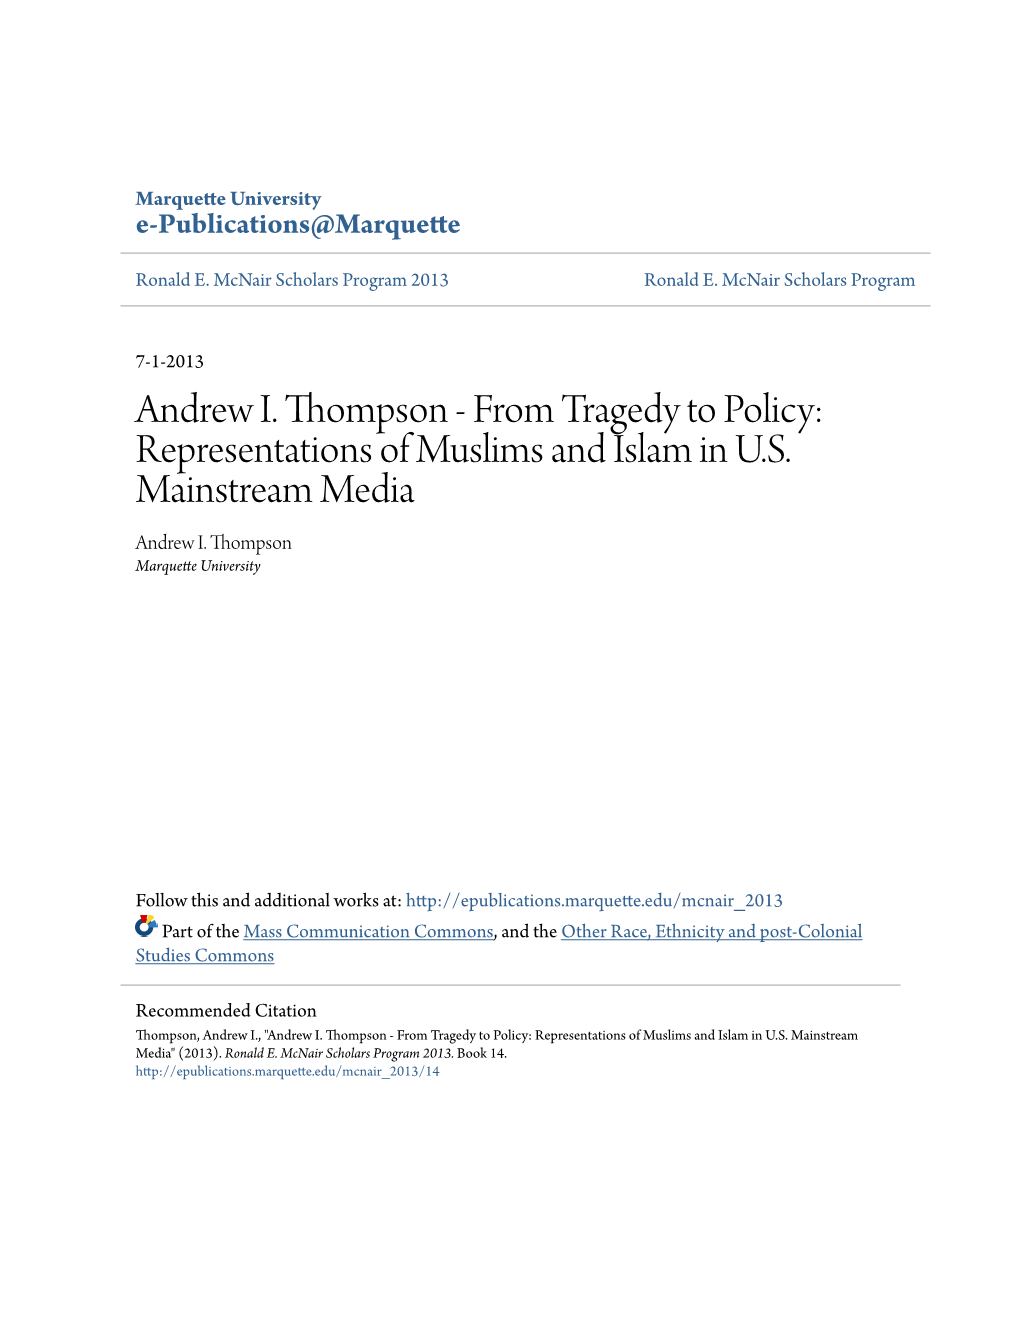 Representations of Muslims and Islam in US Mainstream Media